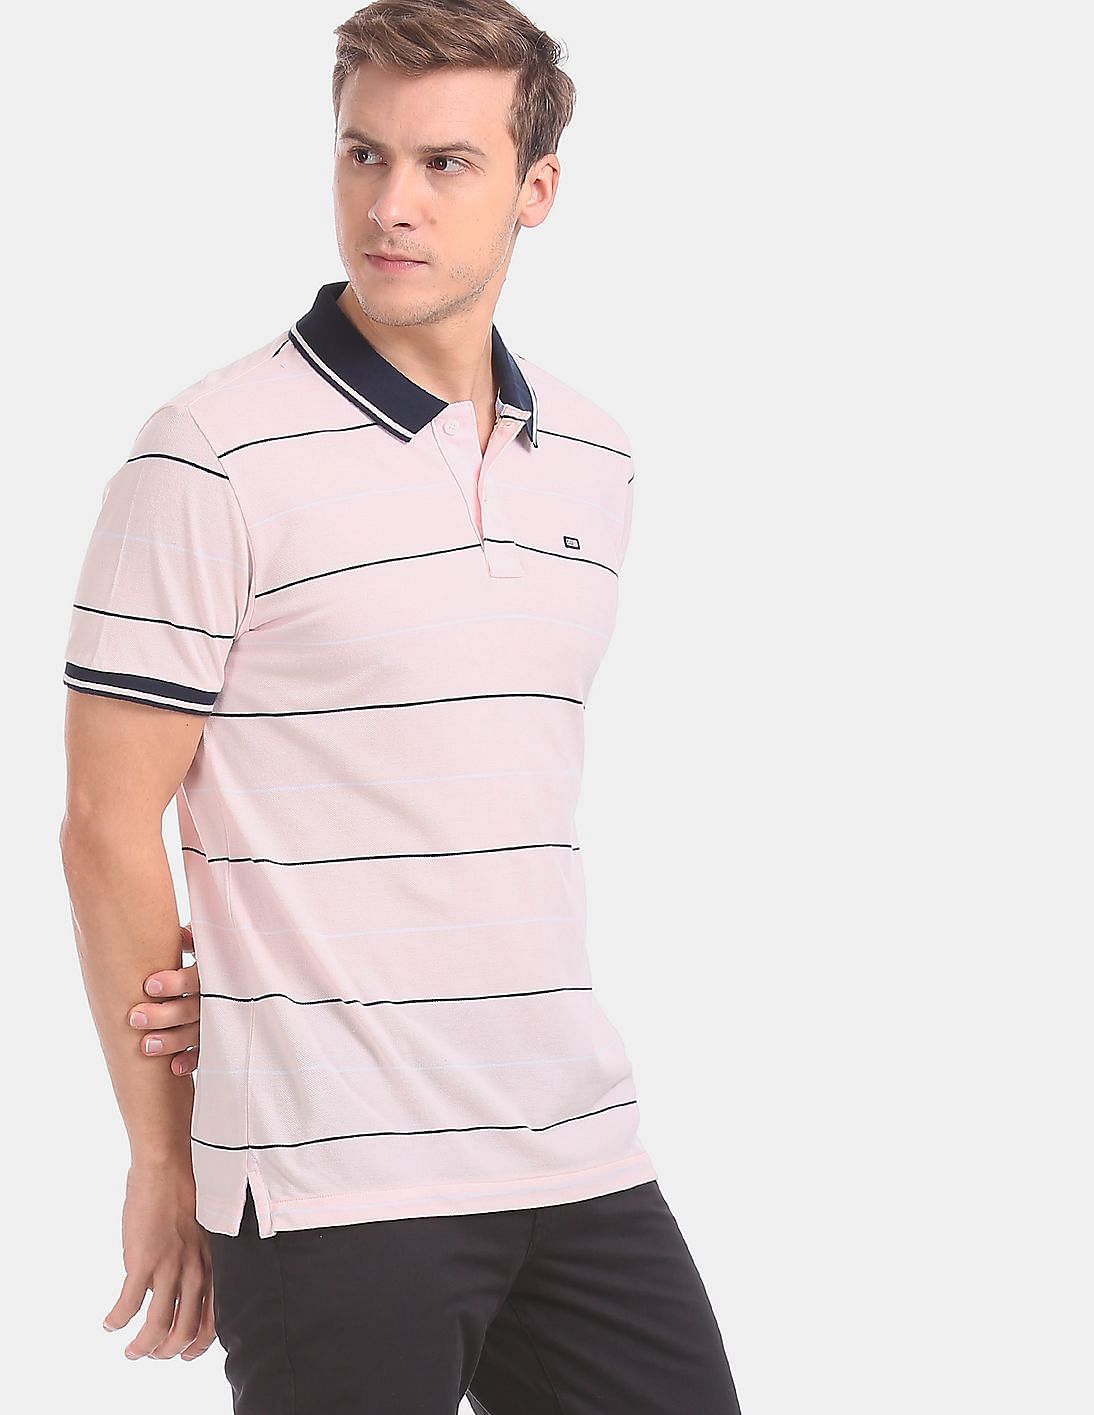 Buy Arrow Sports Pink Striped Compact Cotton Polo Shirt - NNNOW.com